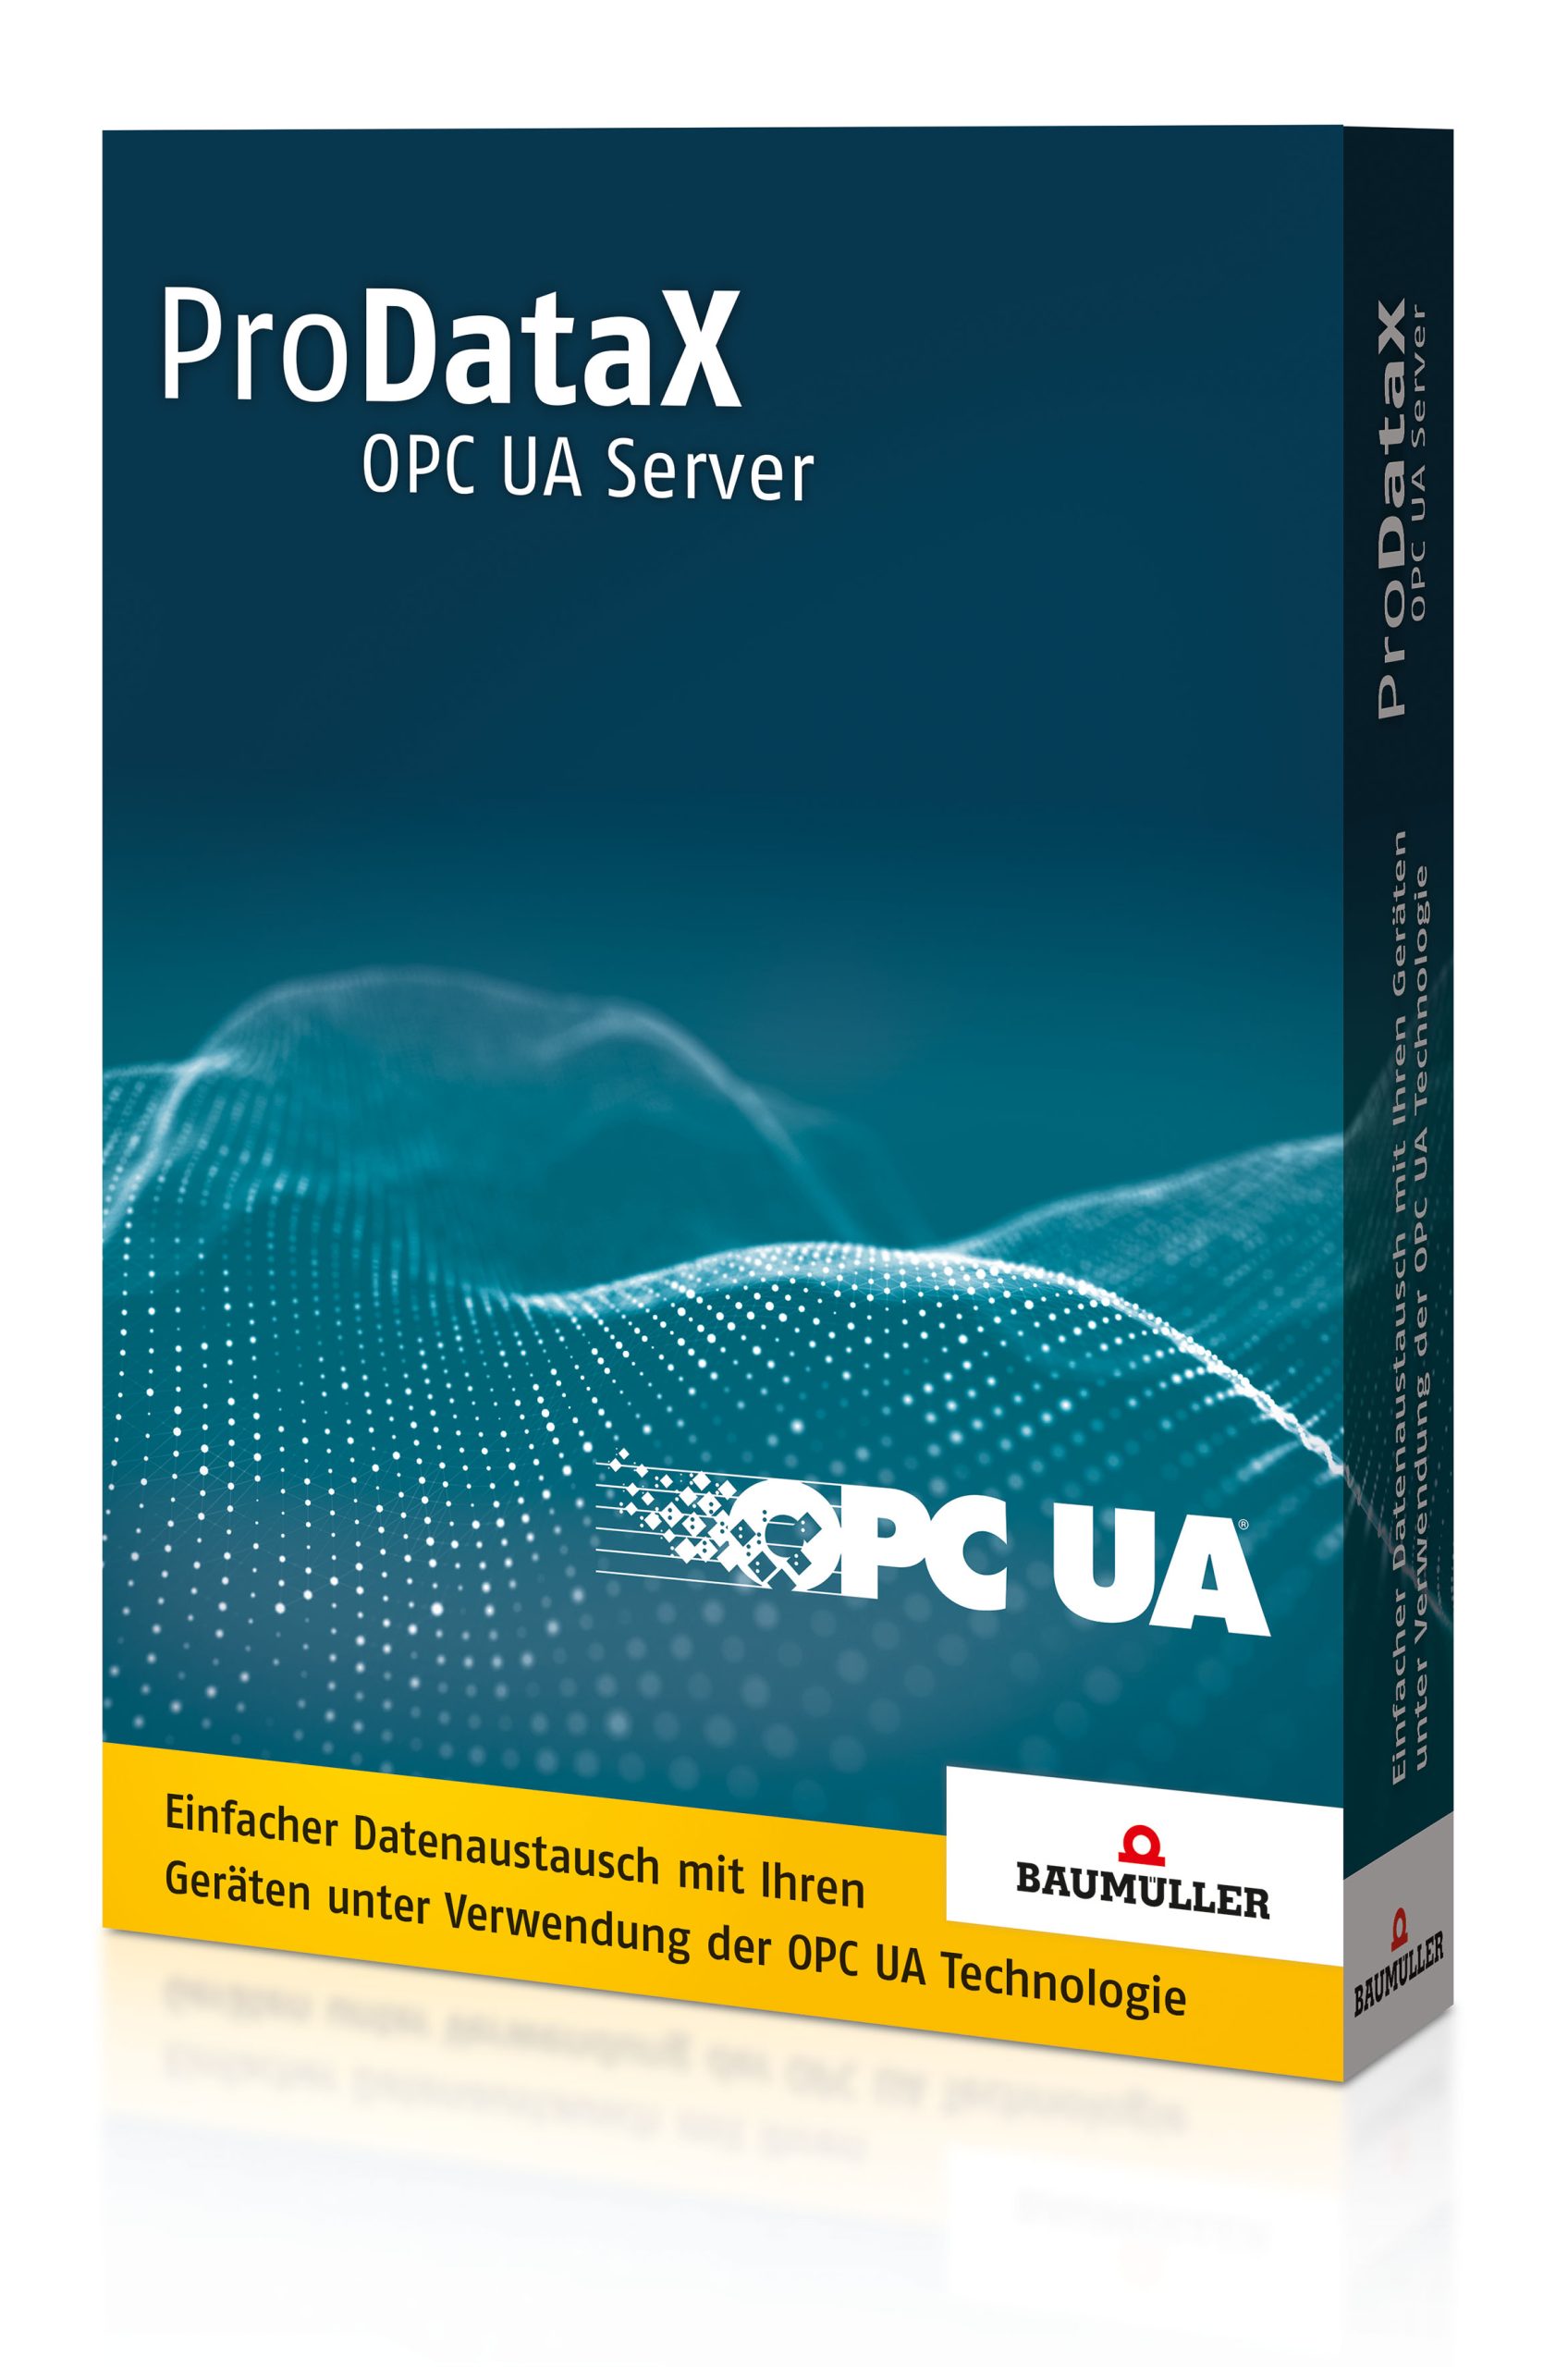 UPC-UA-Software-Tool als Kommunikationsschnittstelle